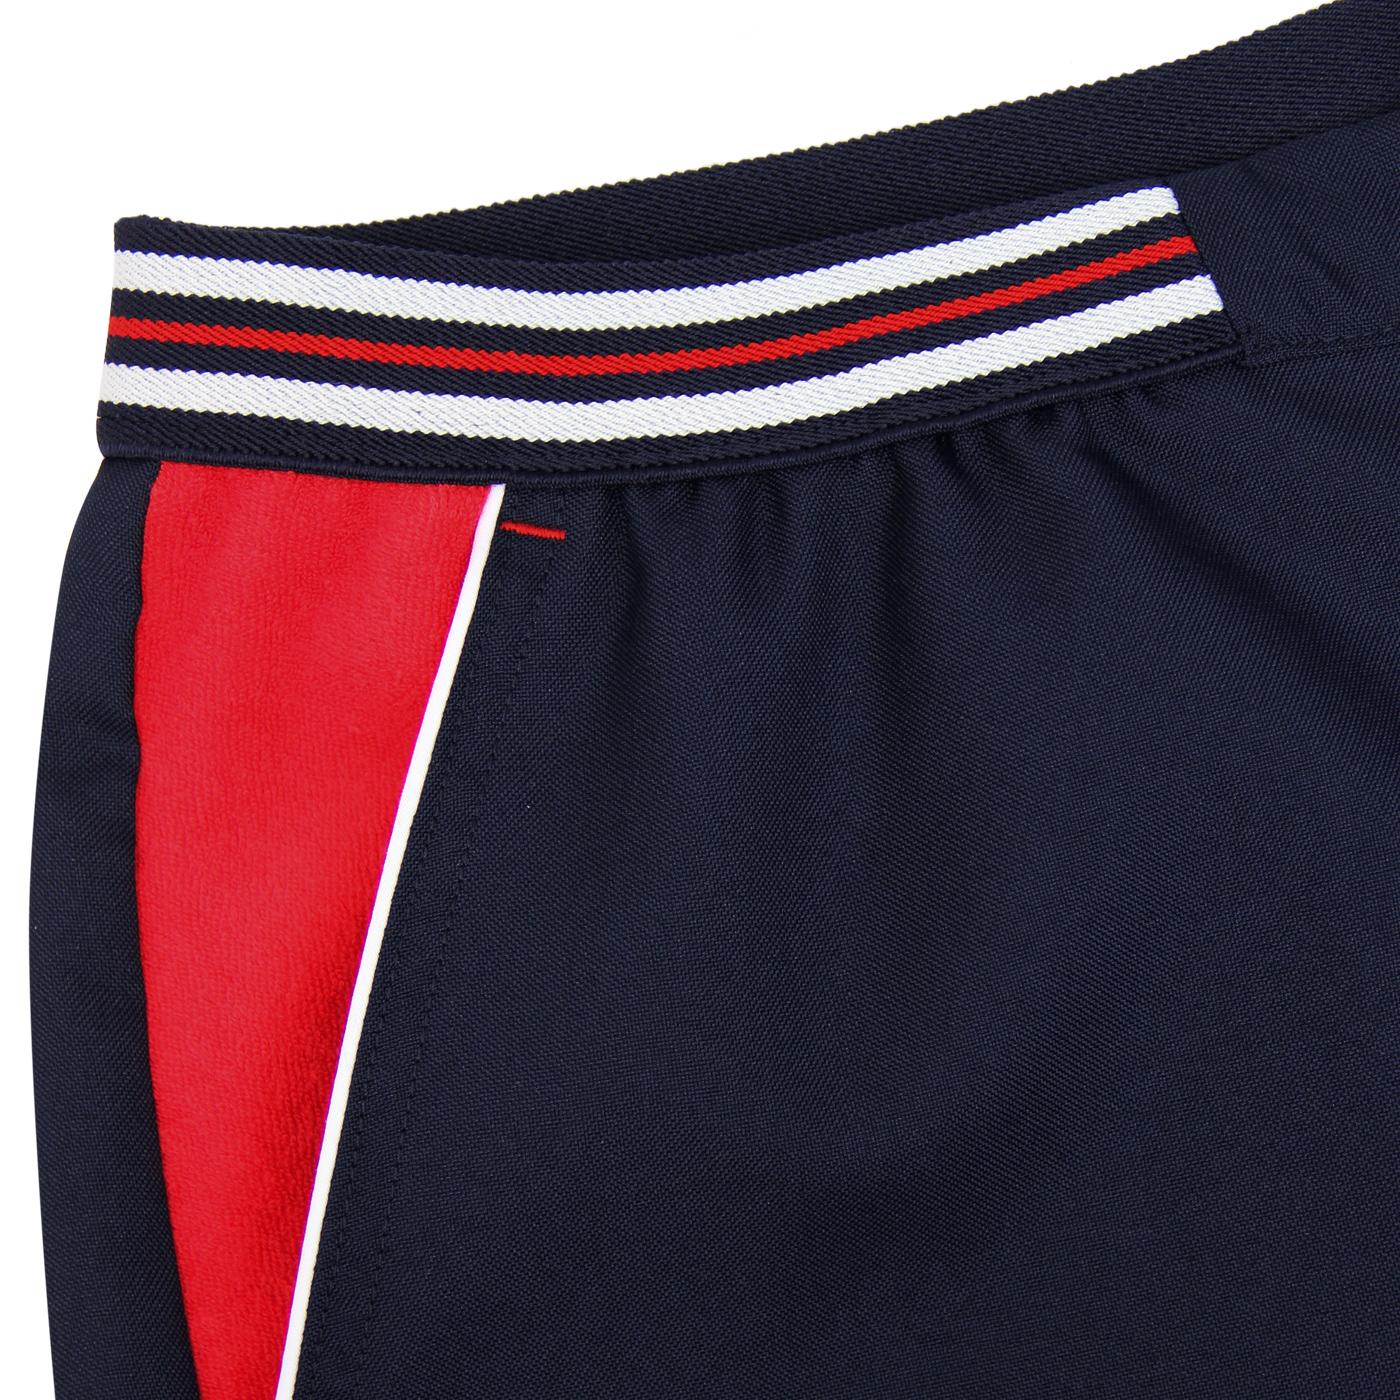 FILA VINTAGE Hightide 4 Retro Tennis Shorts Peacoat/Red